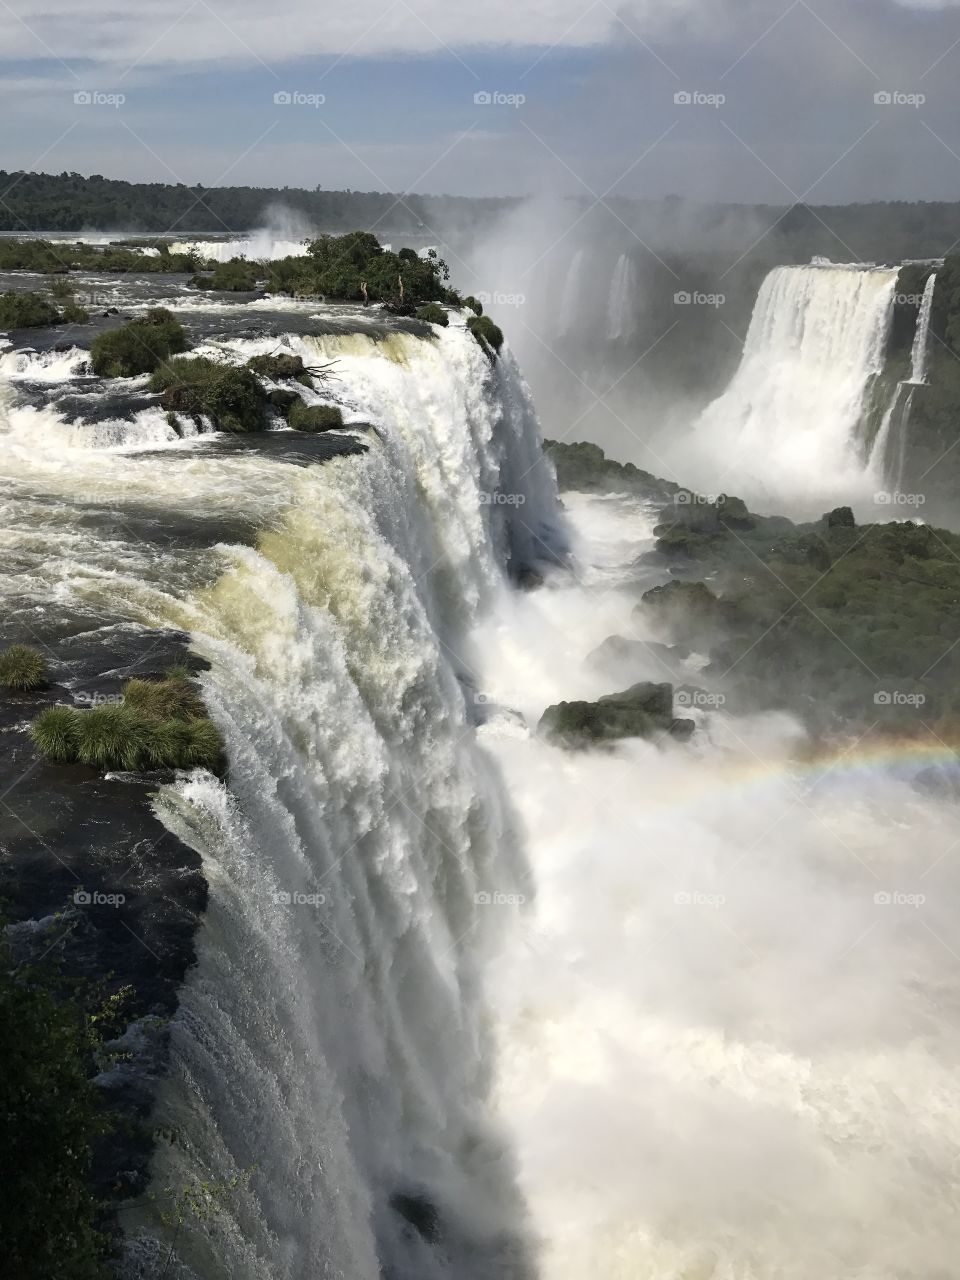 Iguazul Falls, Brazil 